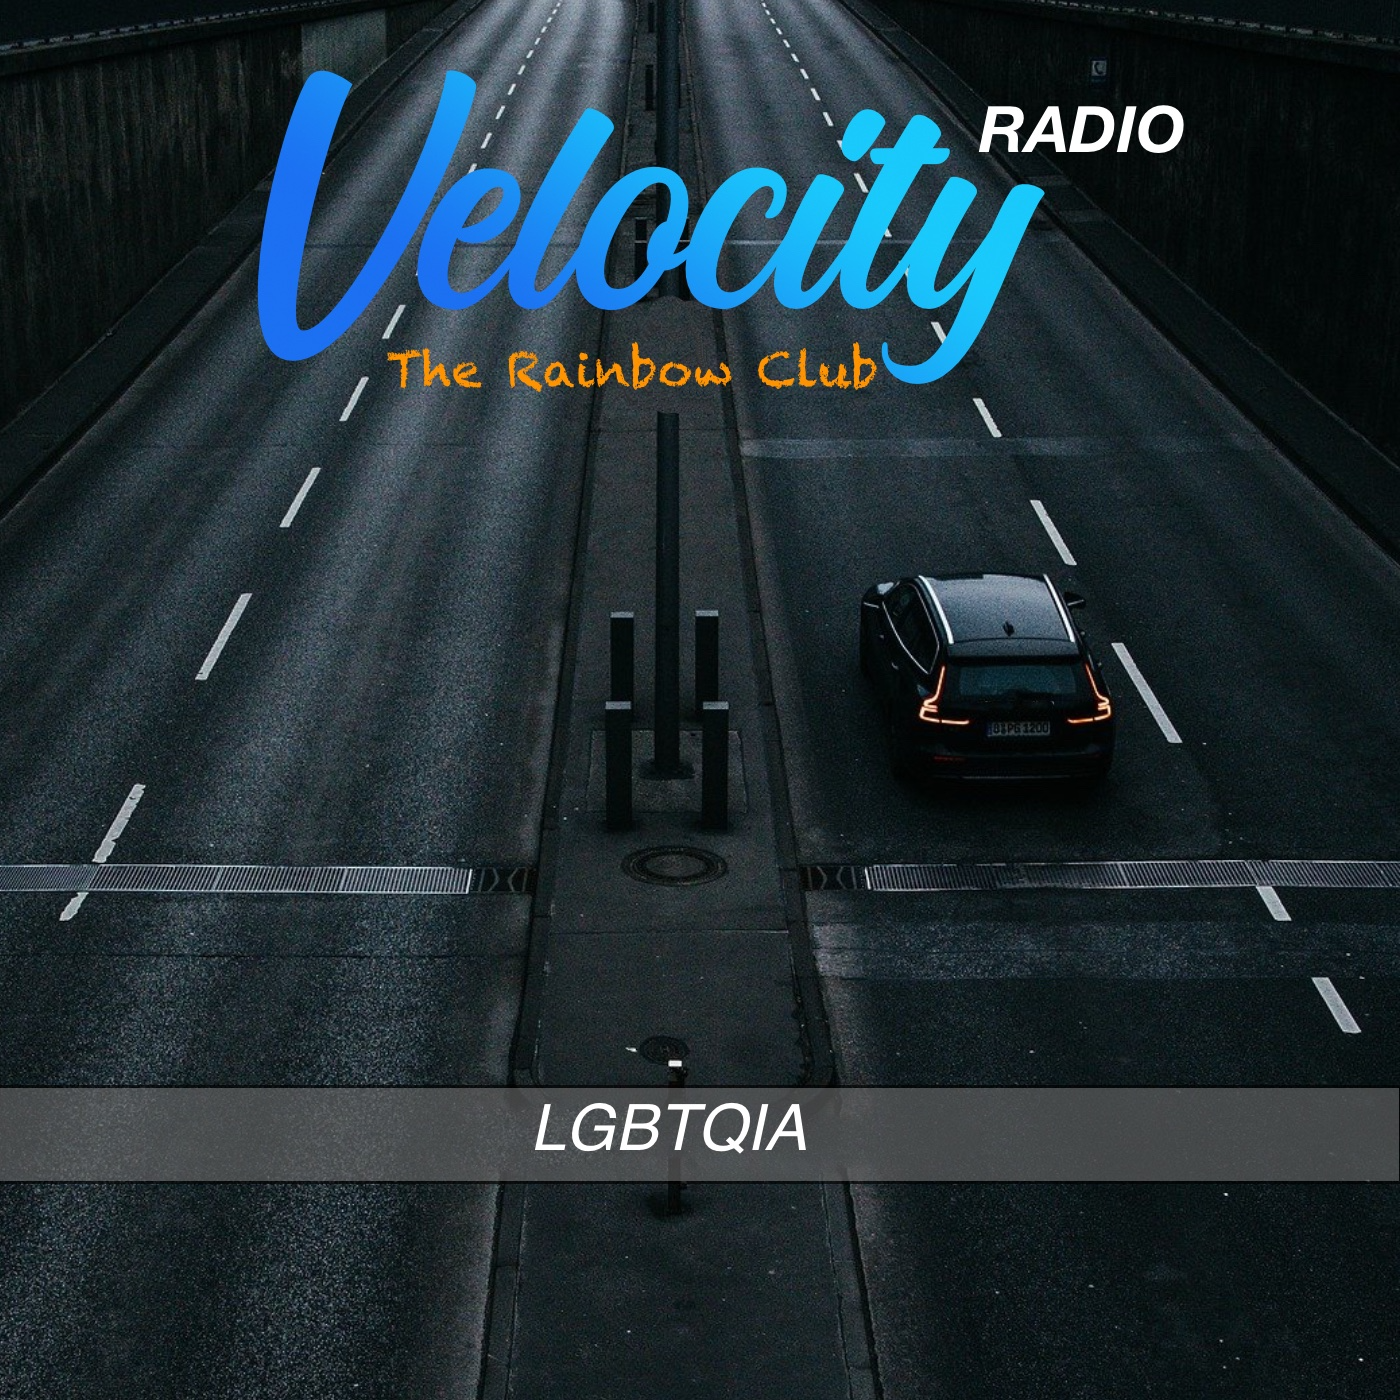 Velocity Radio - The Rainbow Club